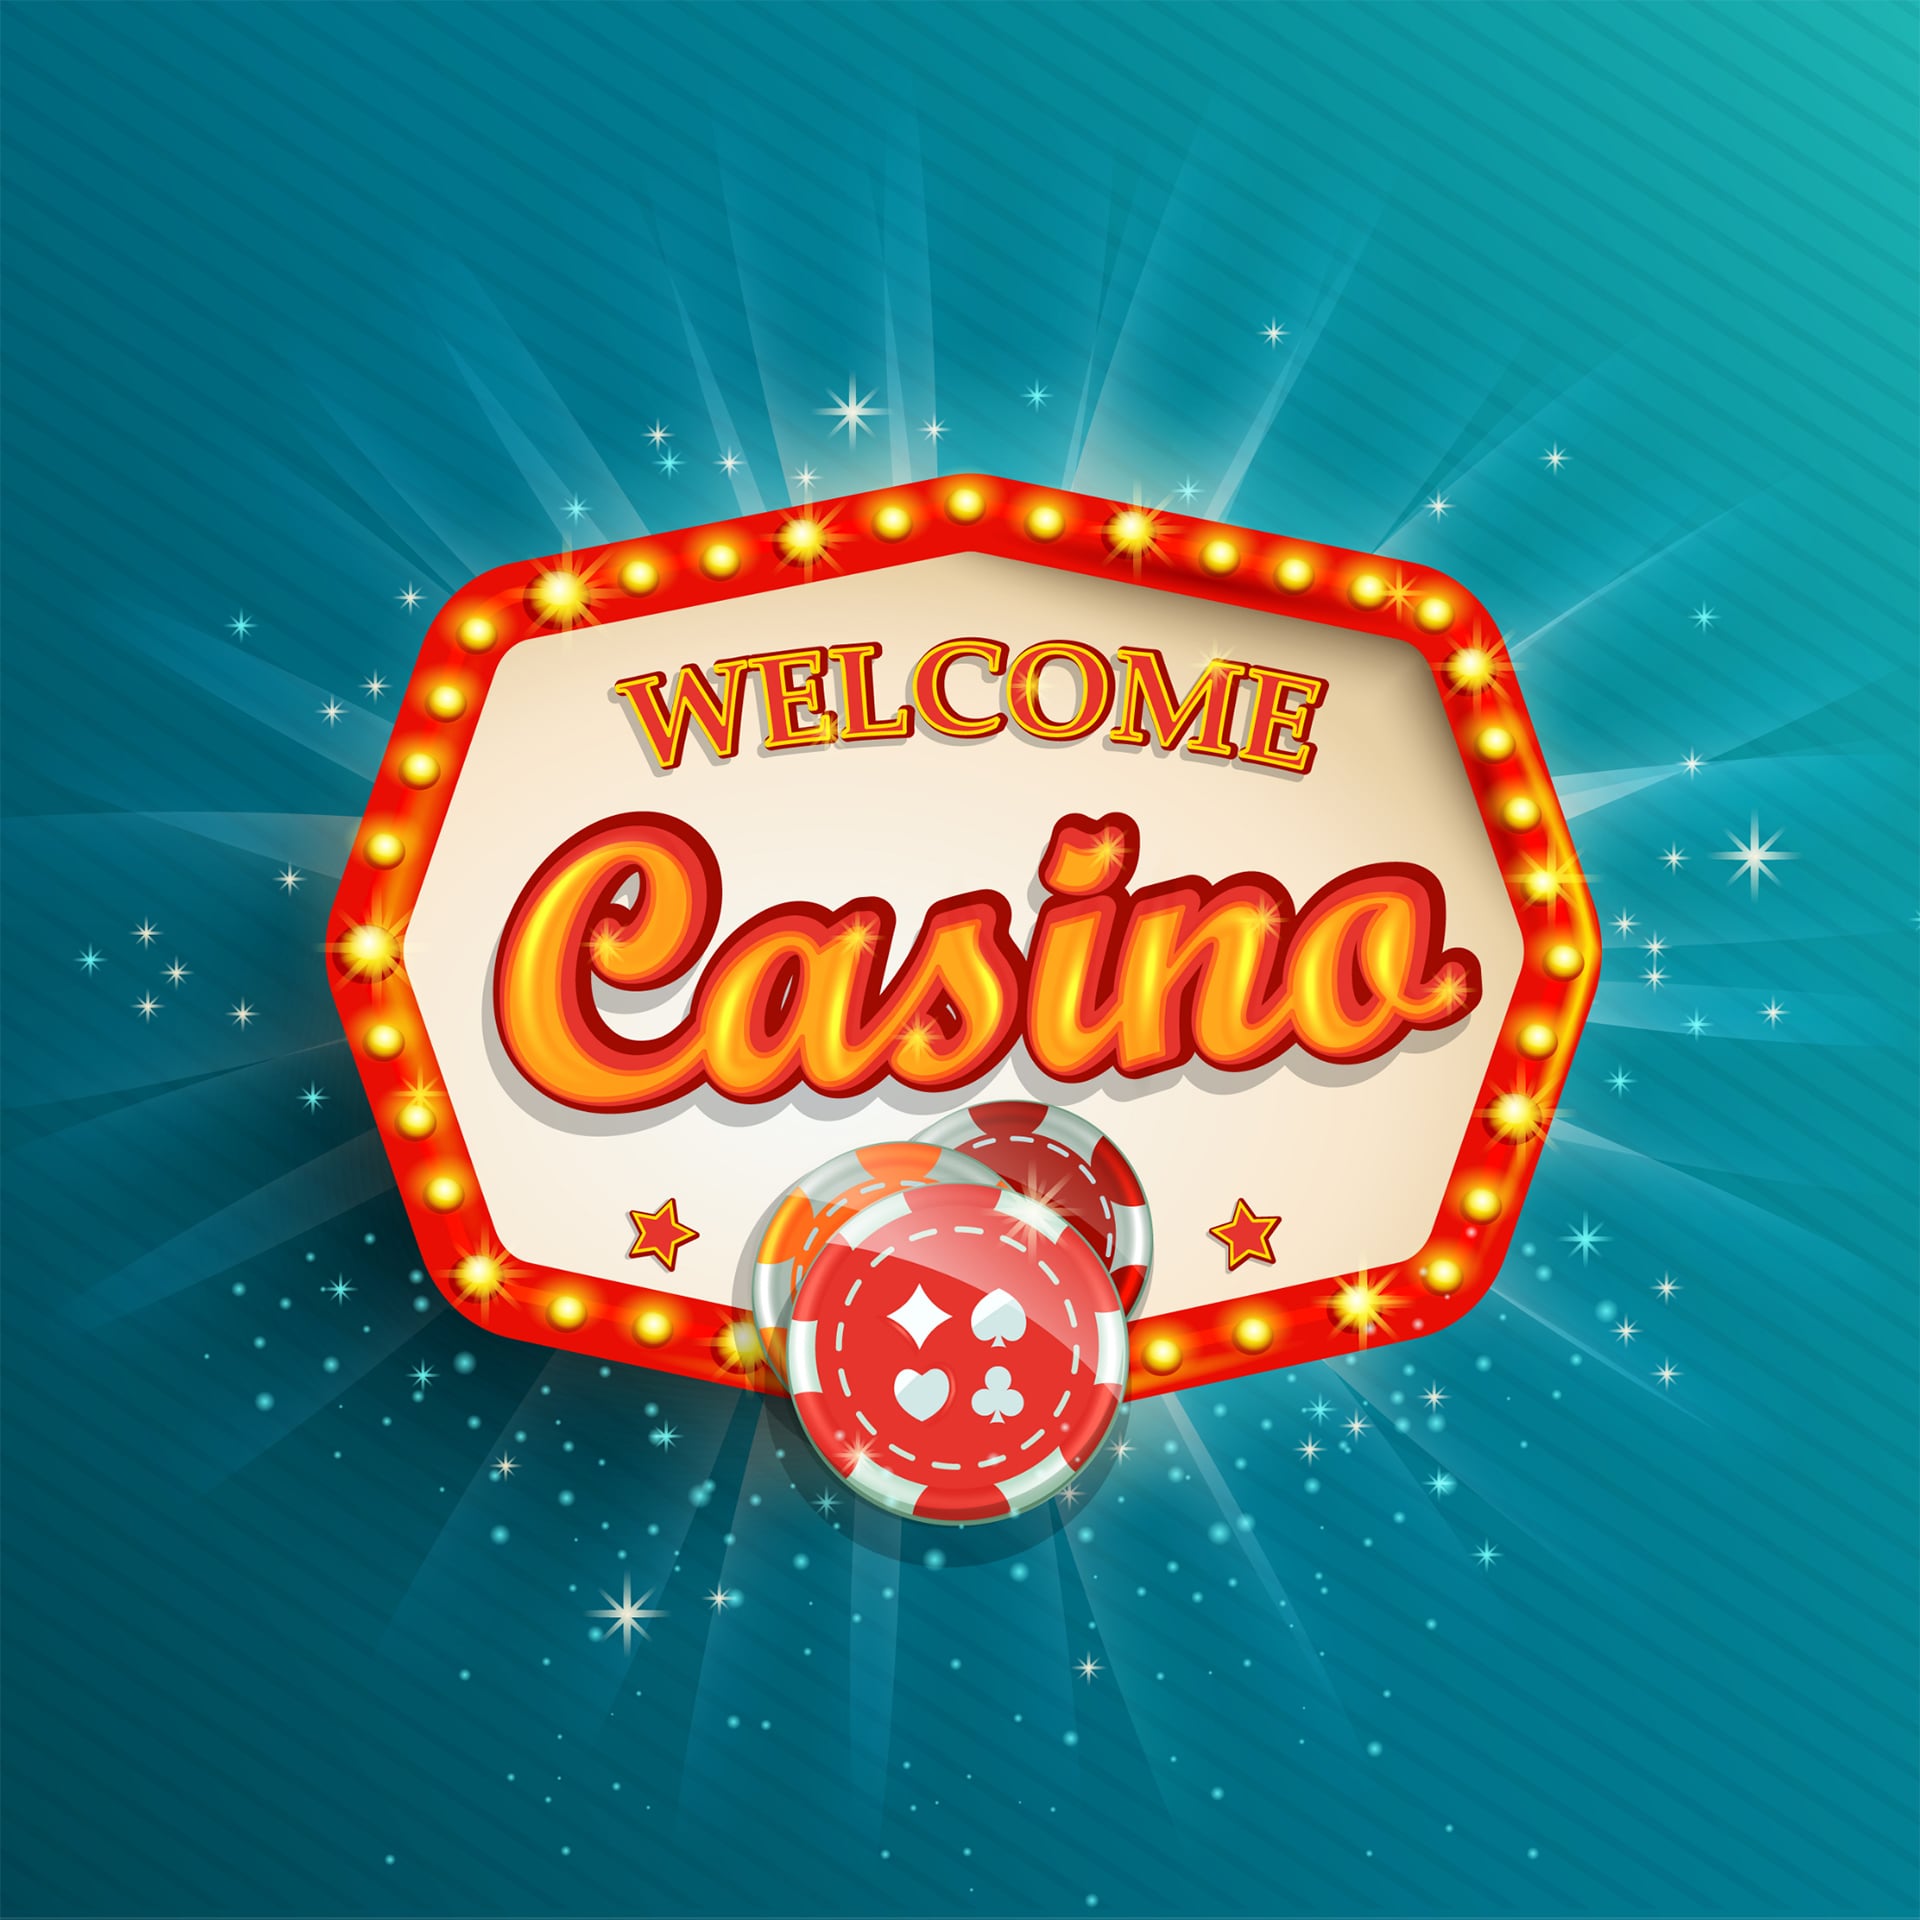 The Joy Casino